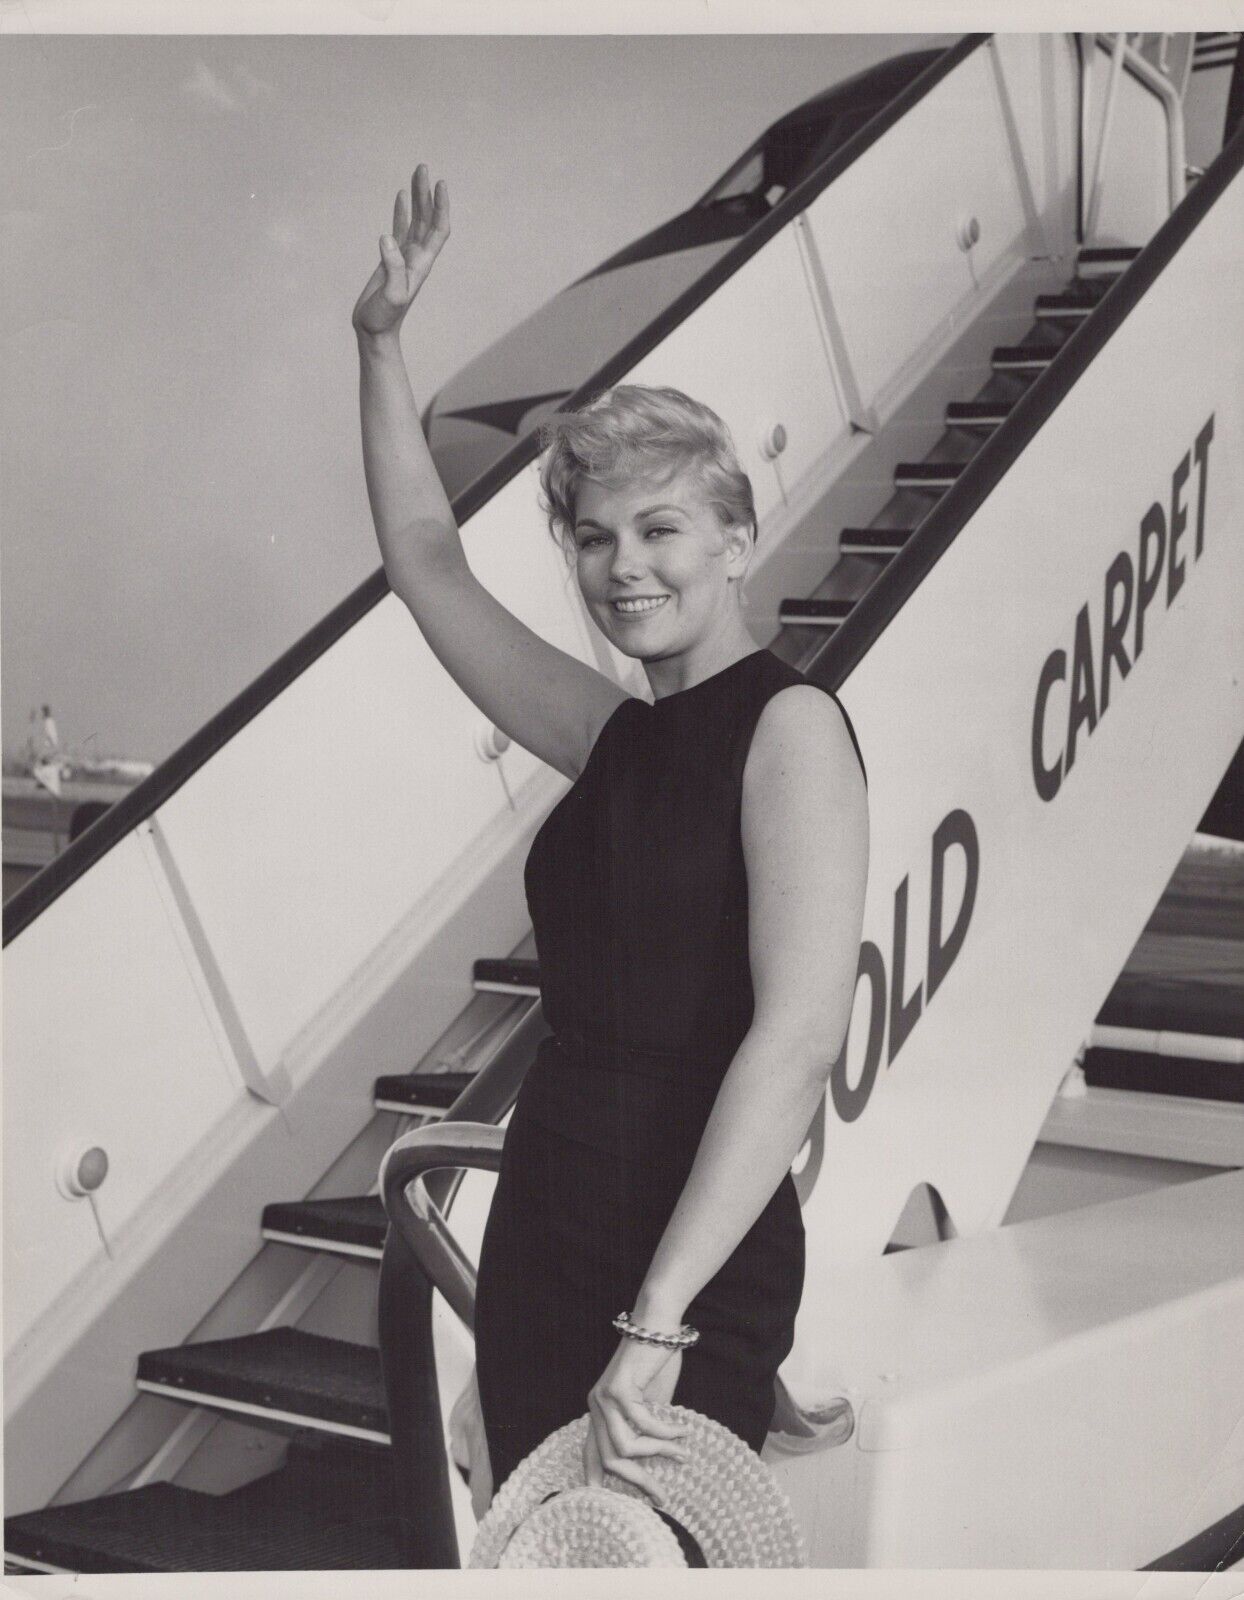 Kim Novak (1950s) ❤ Hollywood beauty - Golden Age - Glamorous Pose Photo K 177